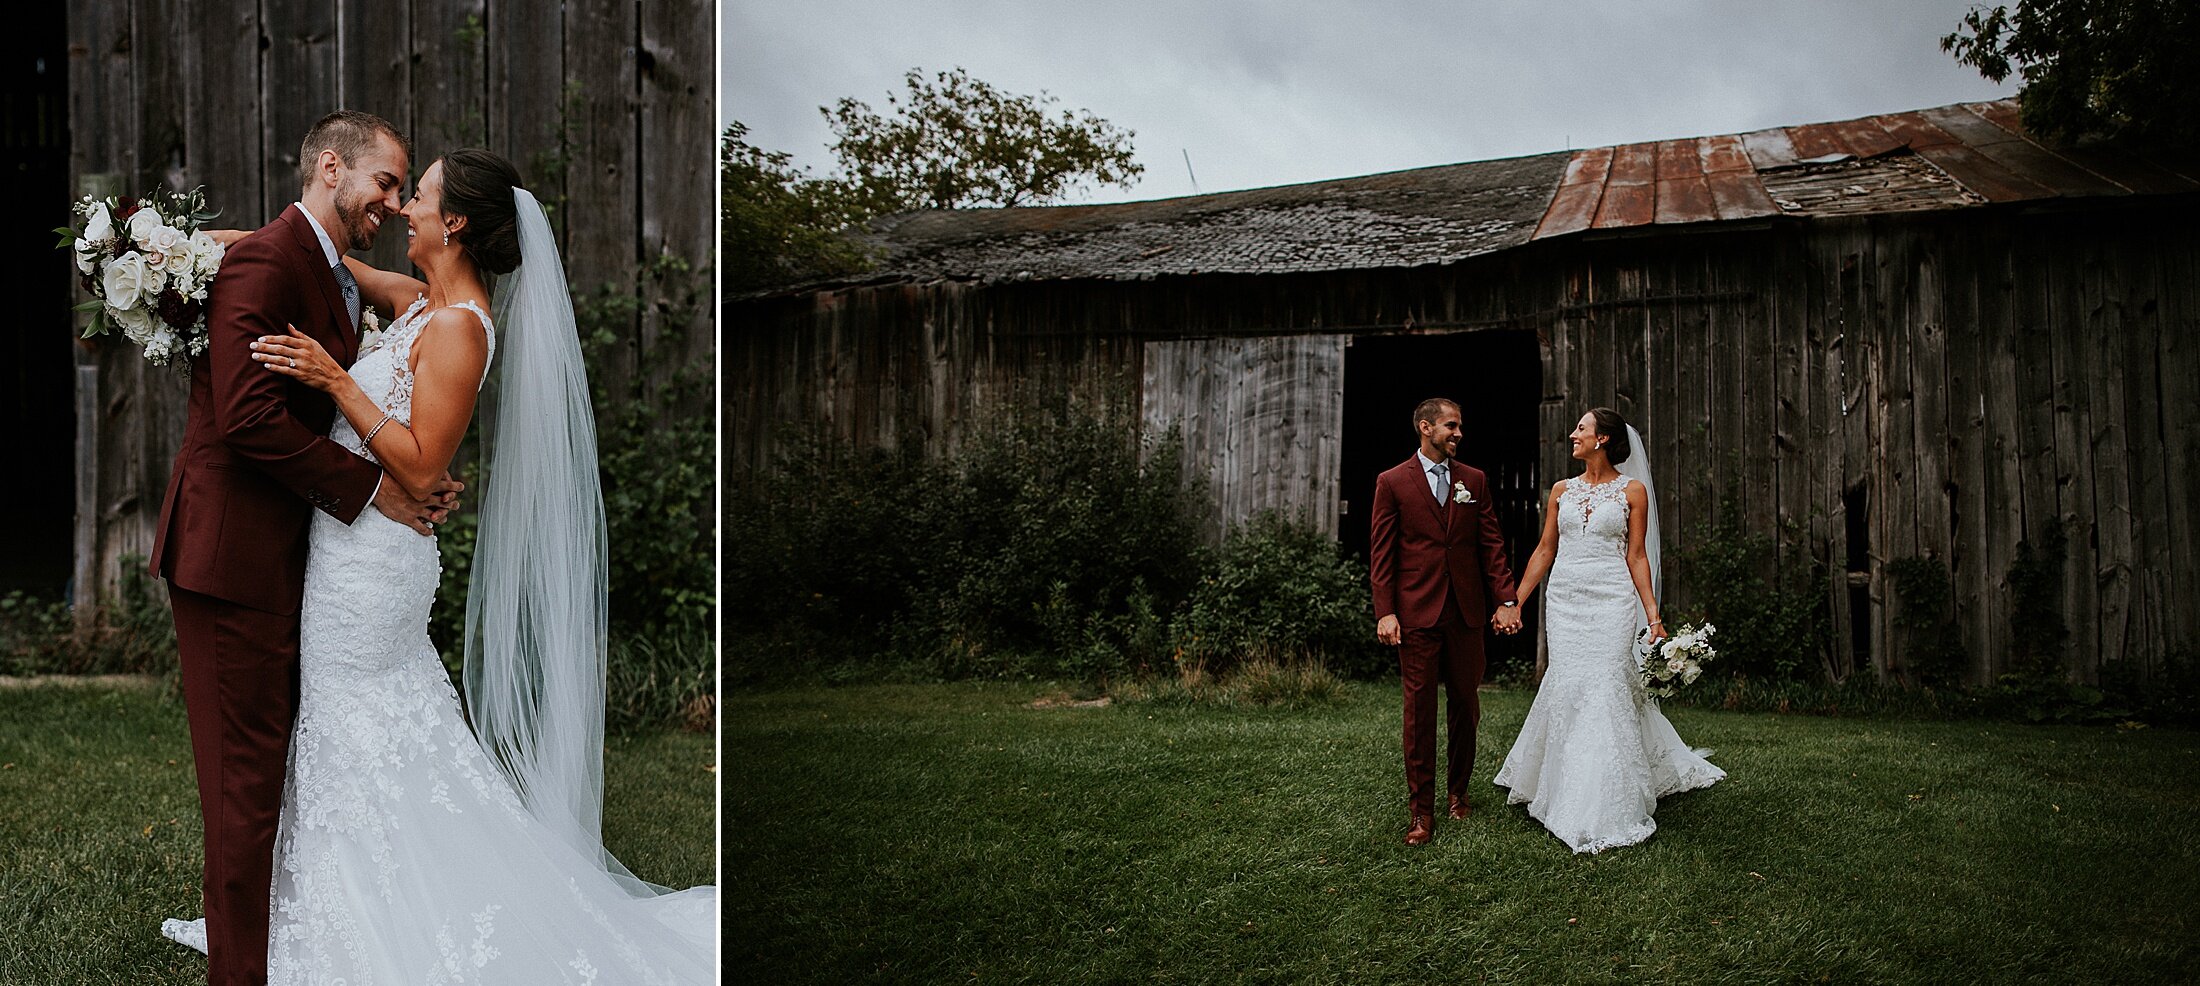 milwaukee wedding photographers - the bog wedding - liller photo - wedding portrait